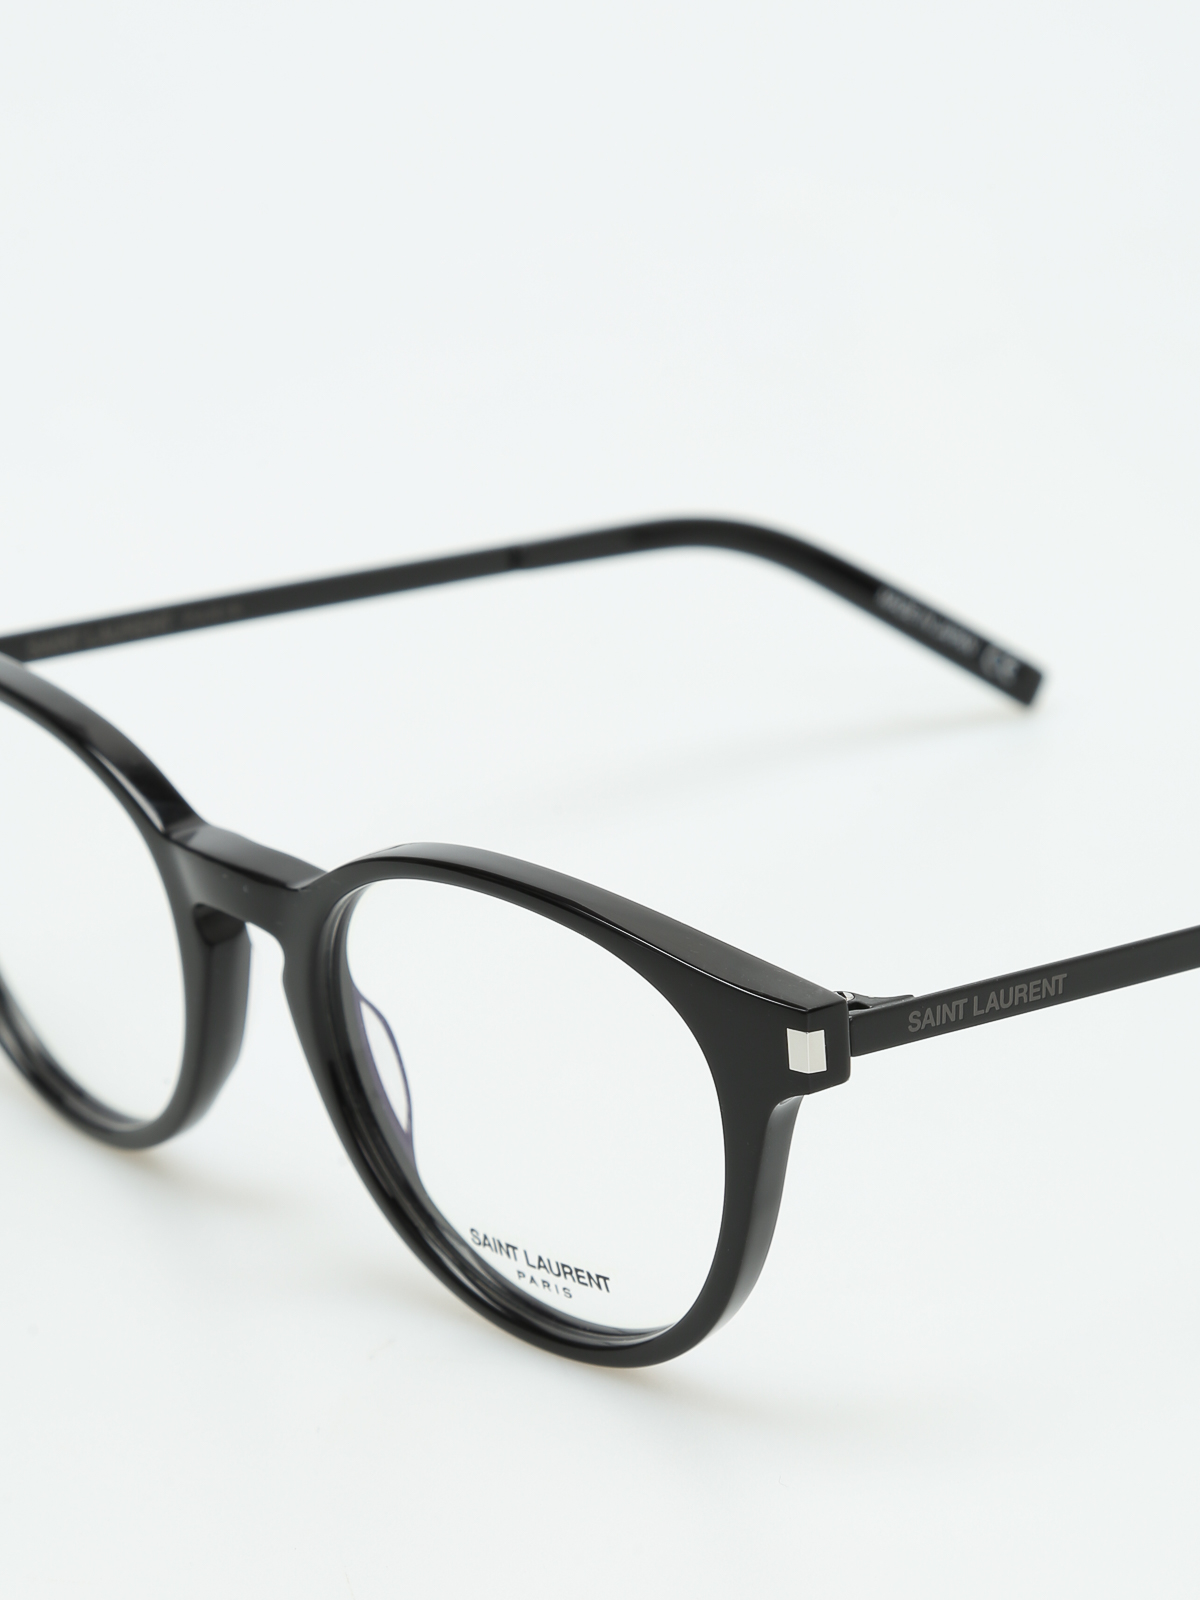 Glasses Saint Laurent - Black frame round glasses - SAINTLAURENTSL25006